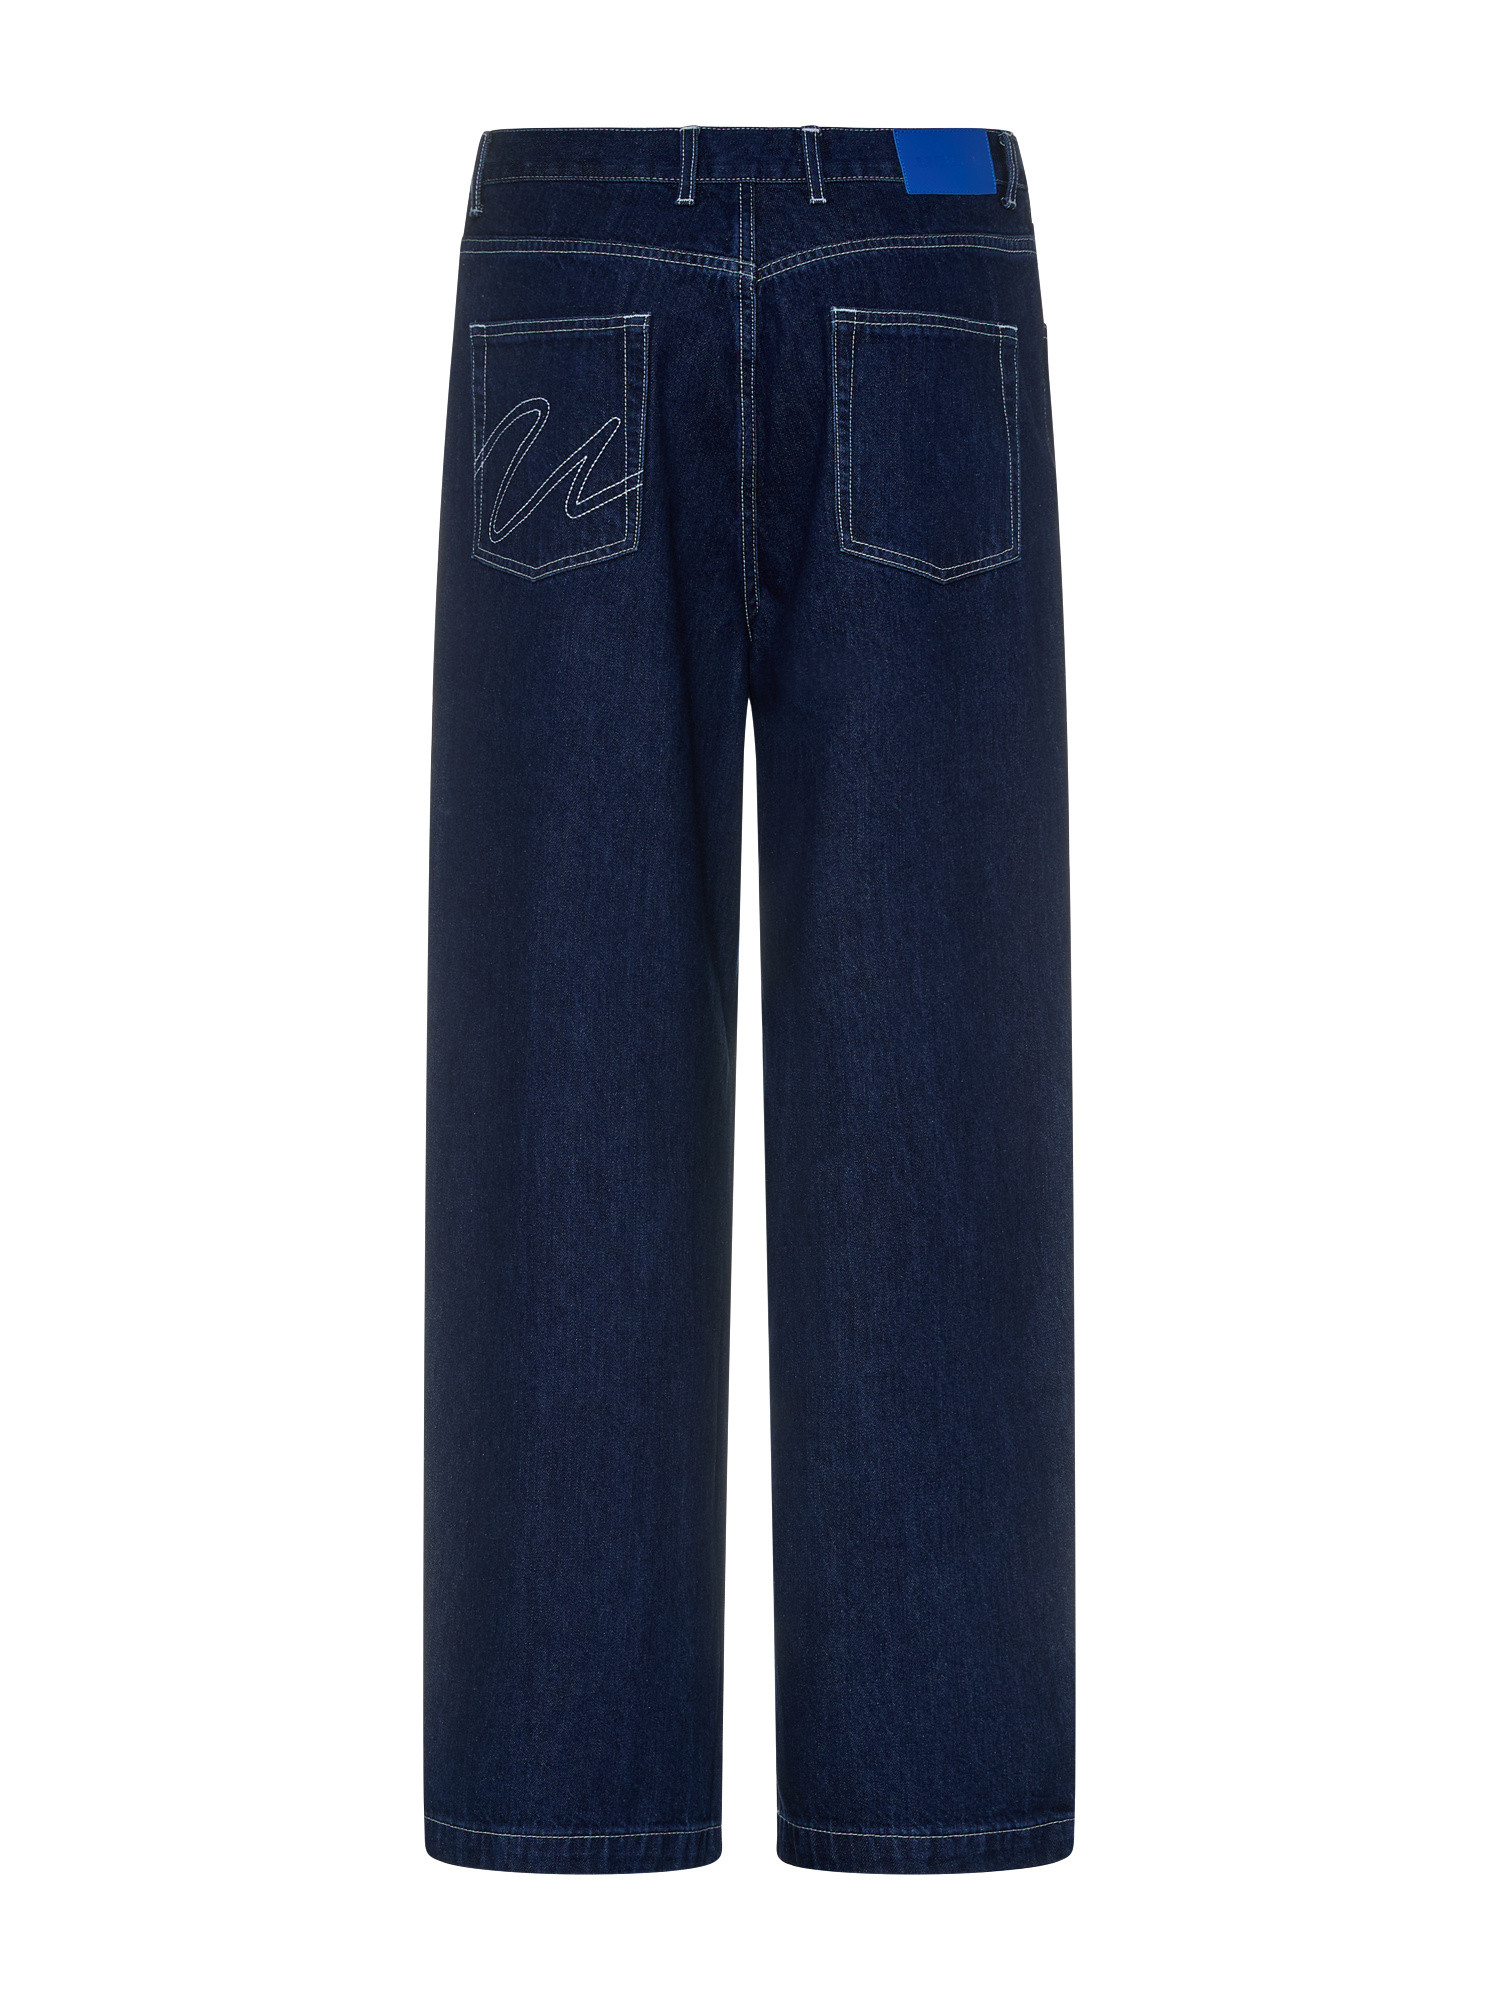 Usual - Pantaloni Denim Giga, Blu scuro, large image number 1